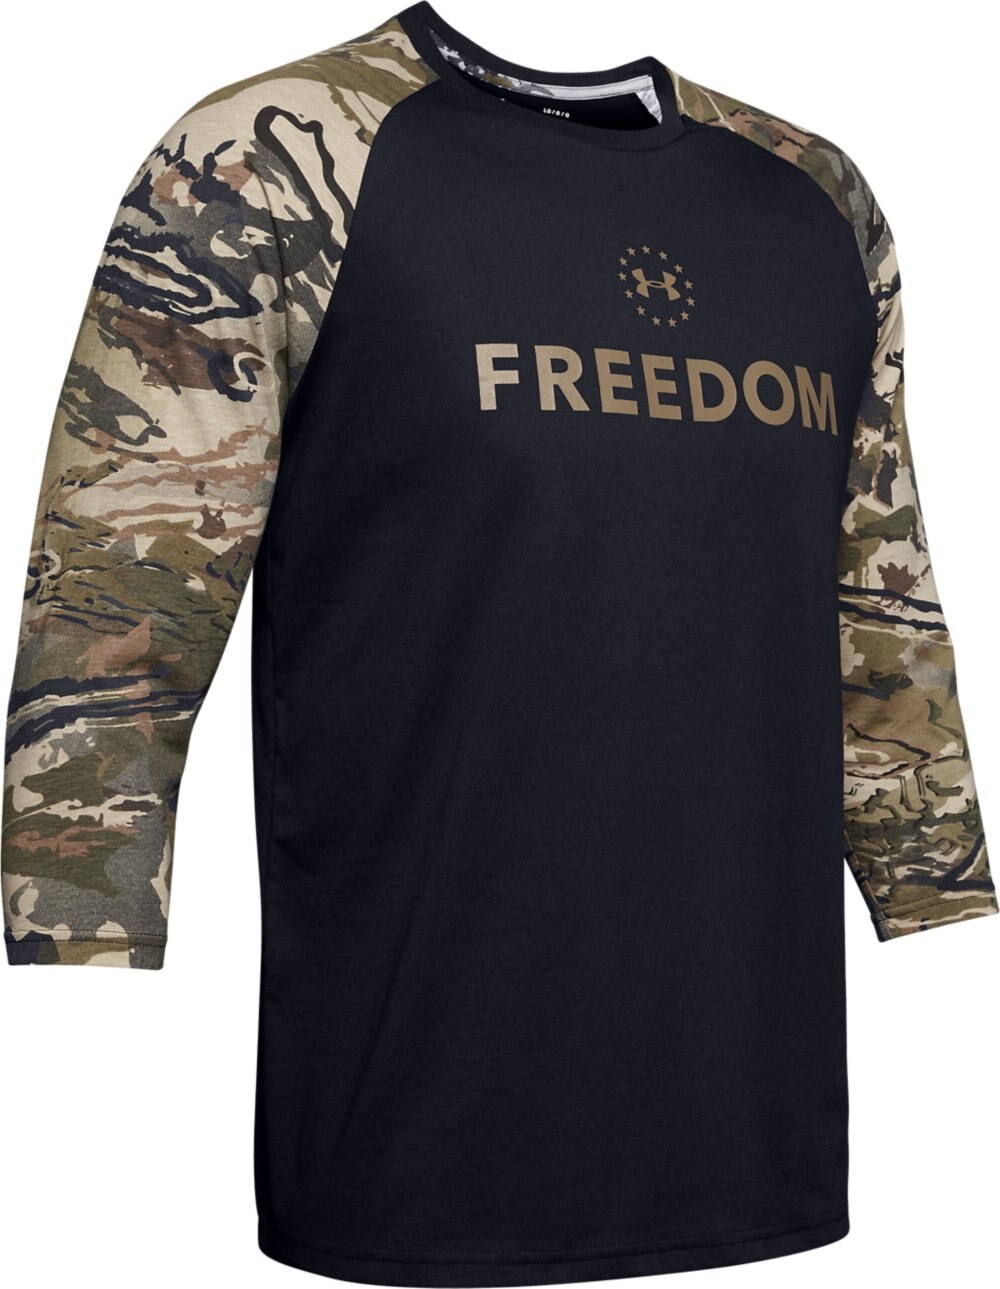 freedom under armor shirt